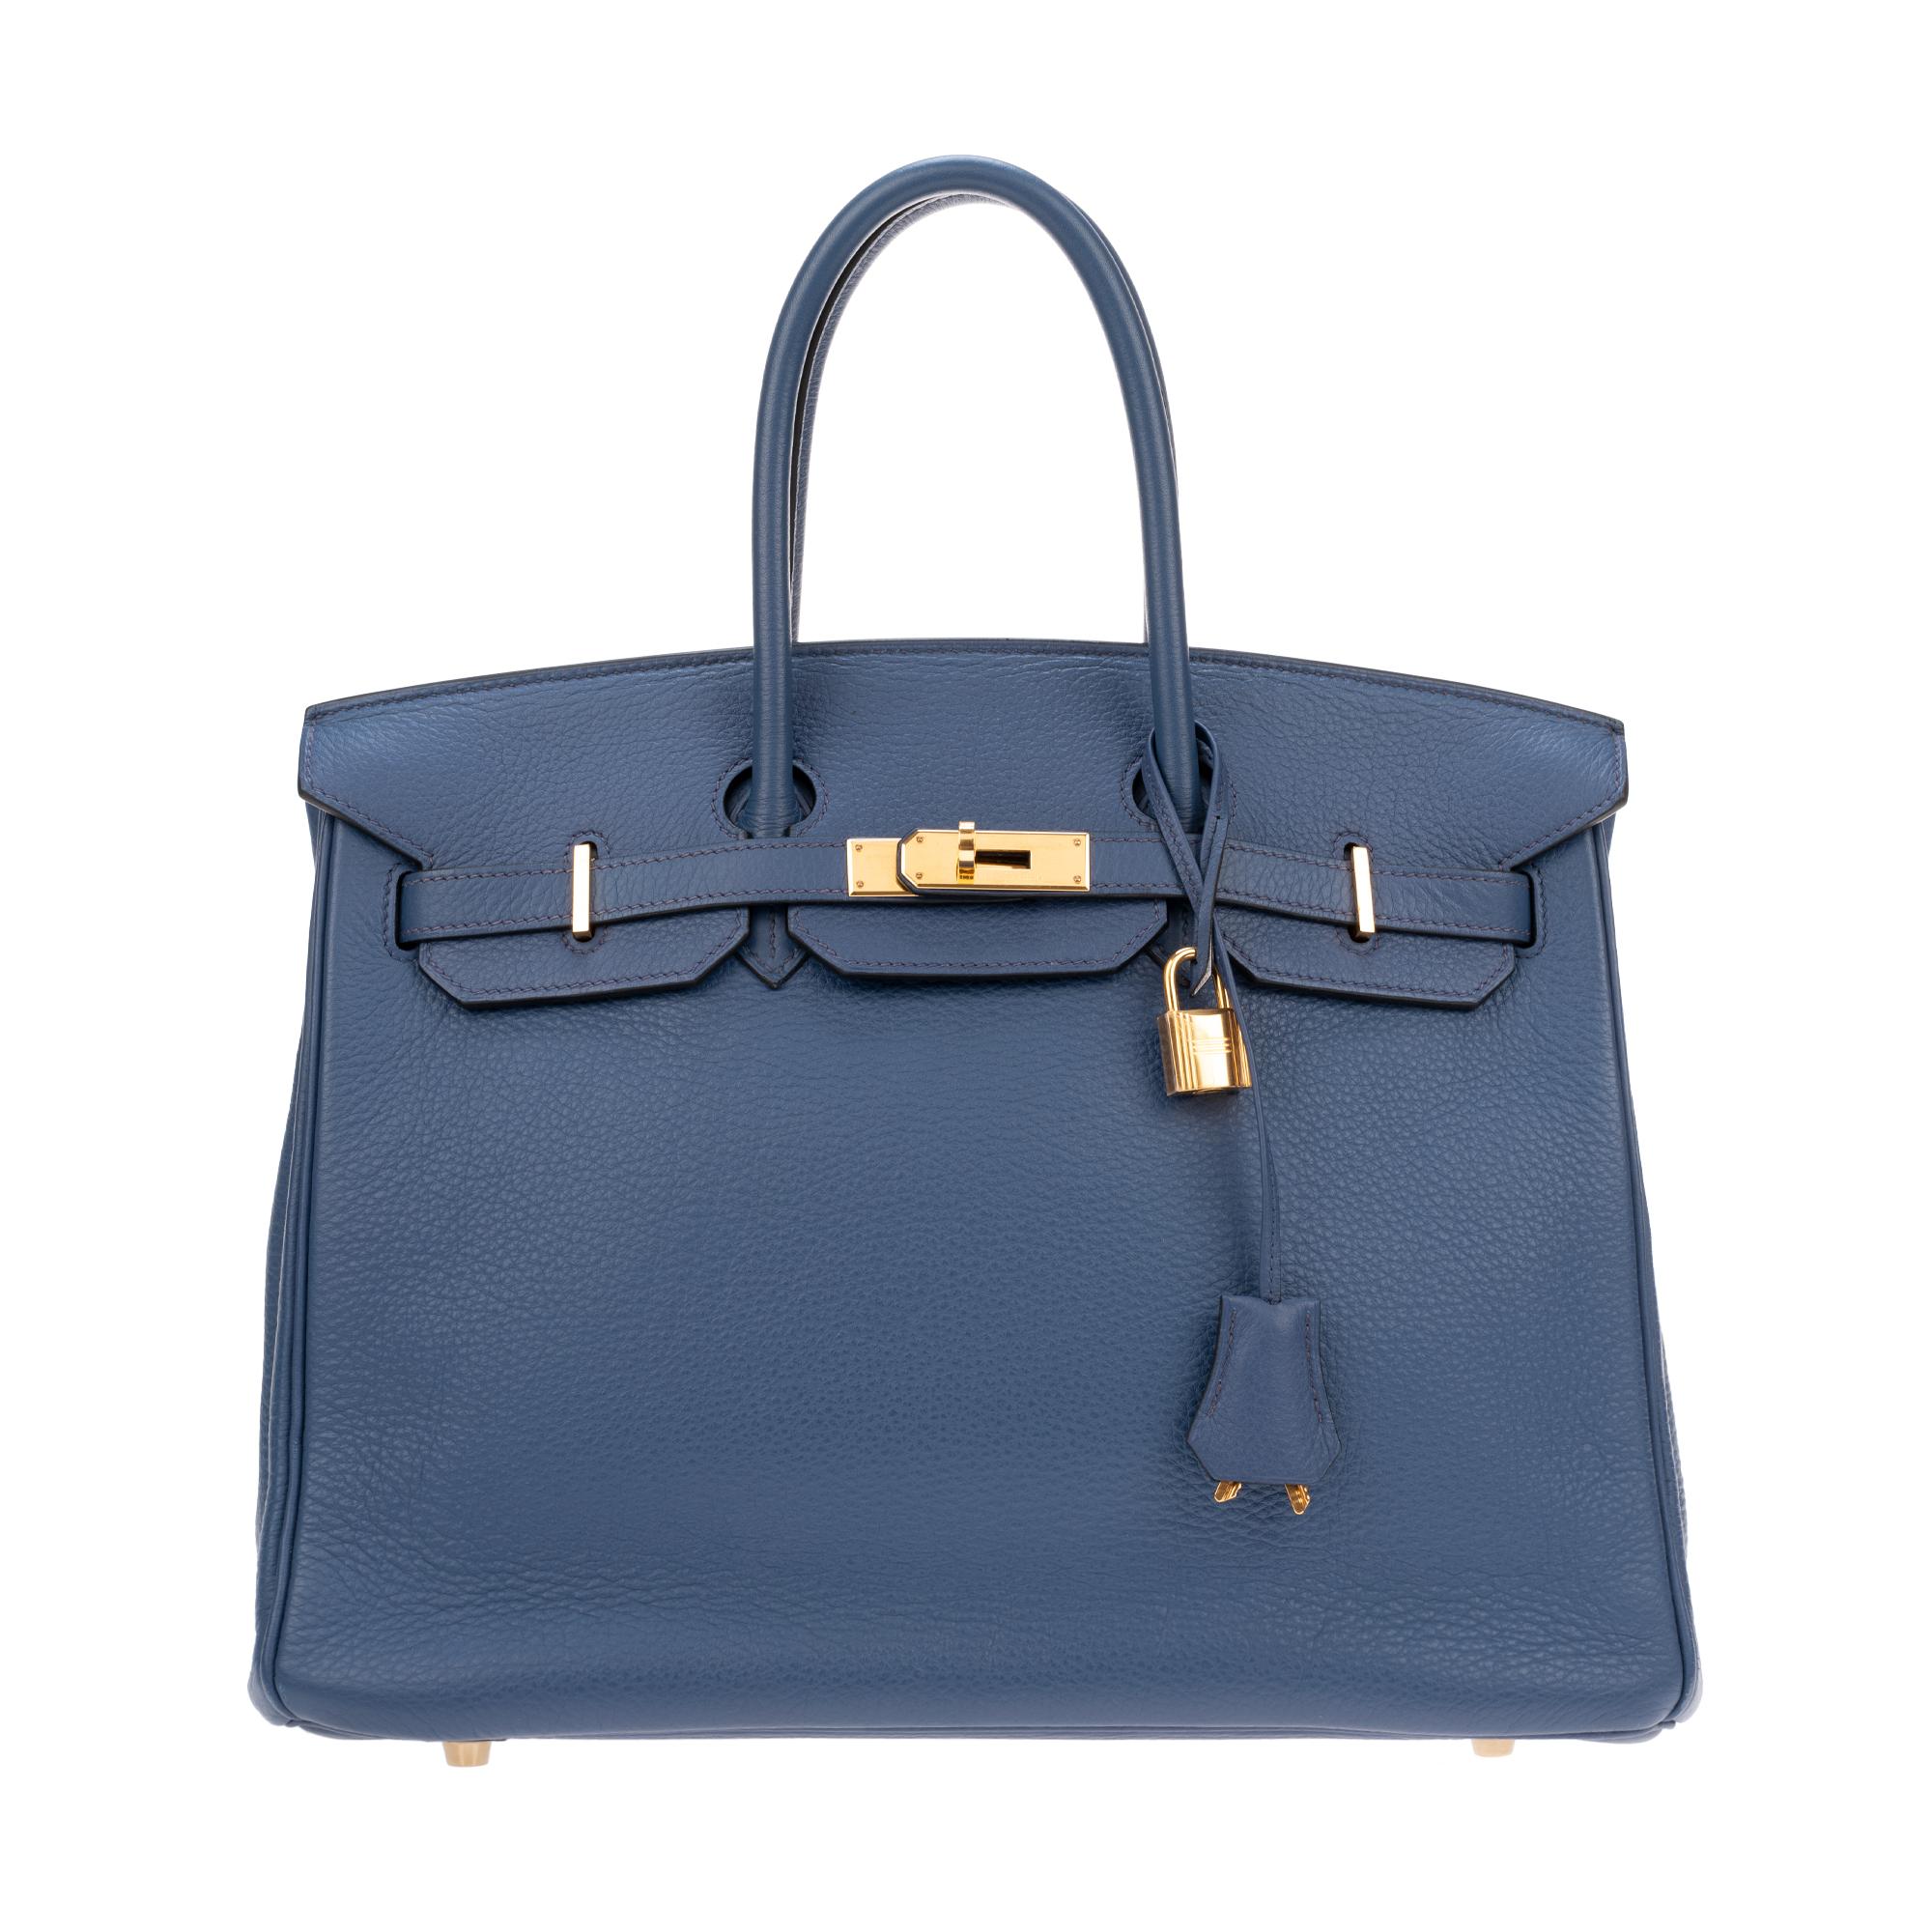 Hermes Birkin 35 Bleu Togo Leather Handbag